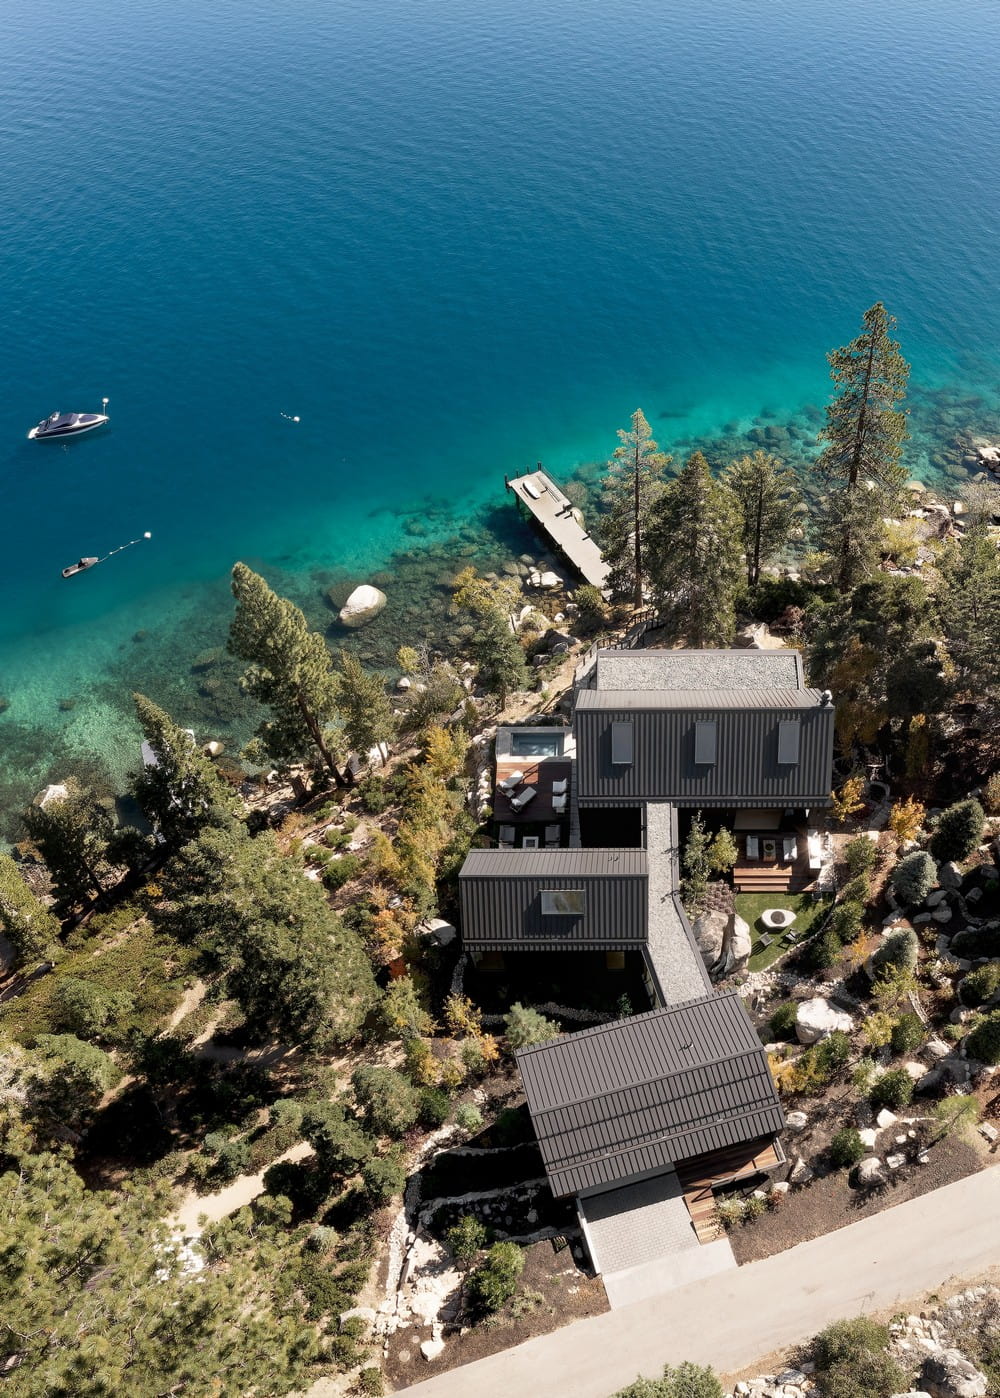 Lake Tahoe Cabins / RO | ROCKETT DESIGN